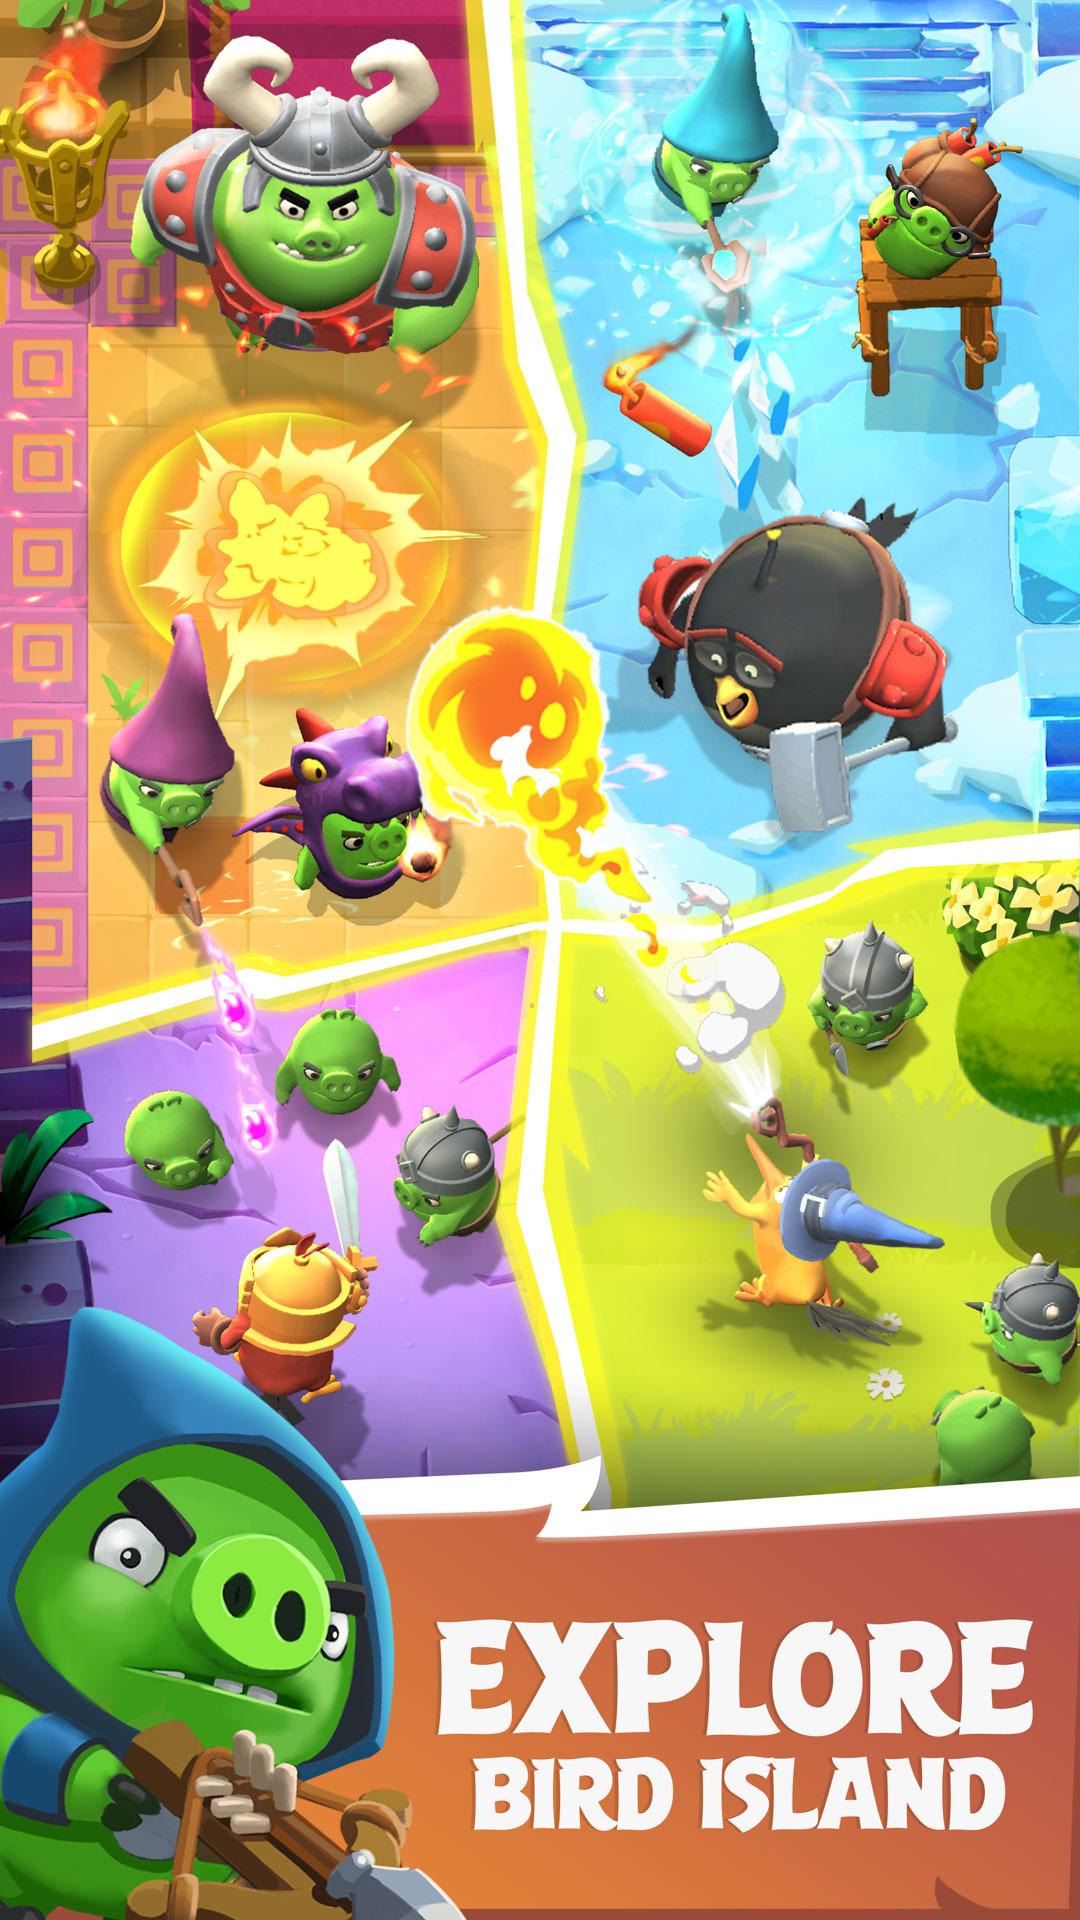 Download & Play Angry Birds Kingdom on PC & Mac (Emulator)